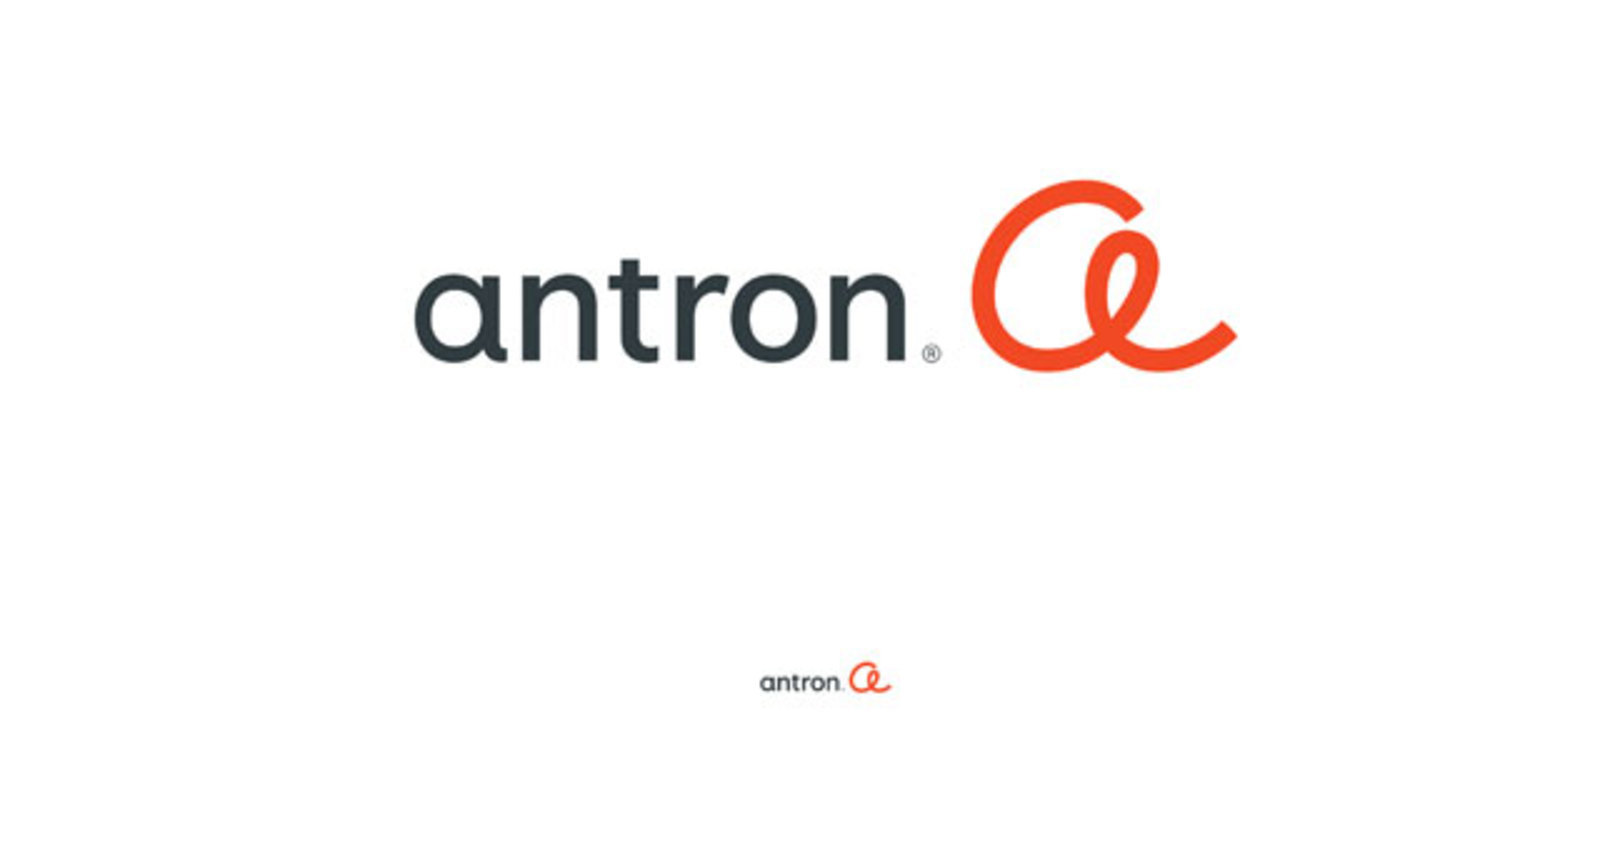 Antron Corporate Identity System